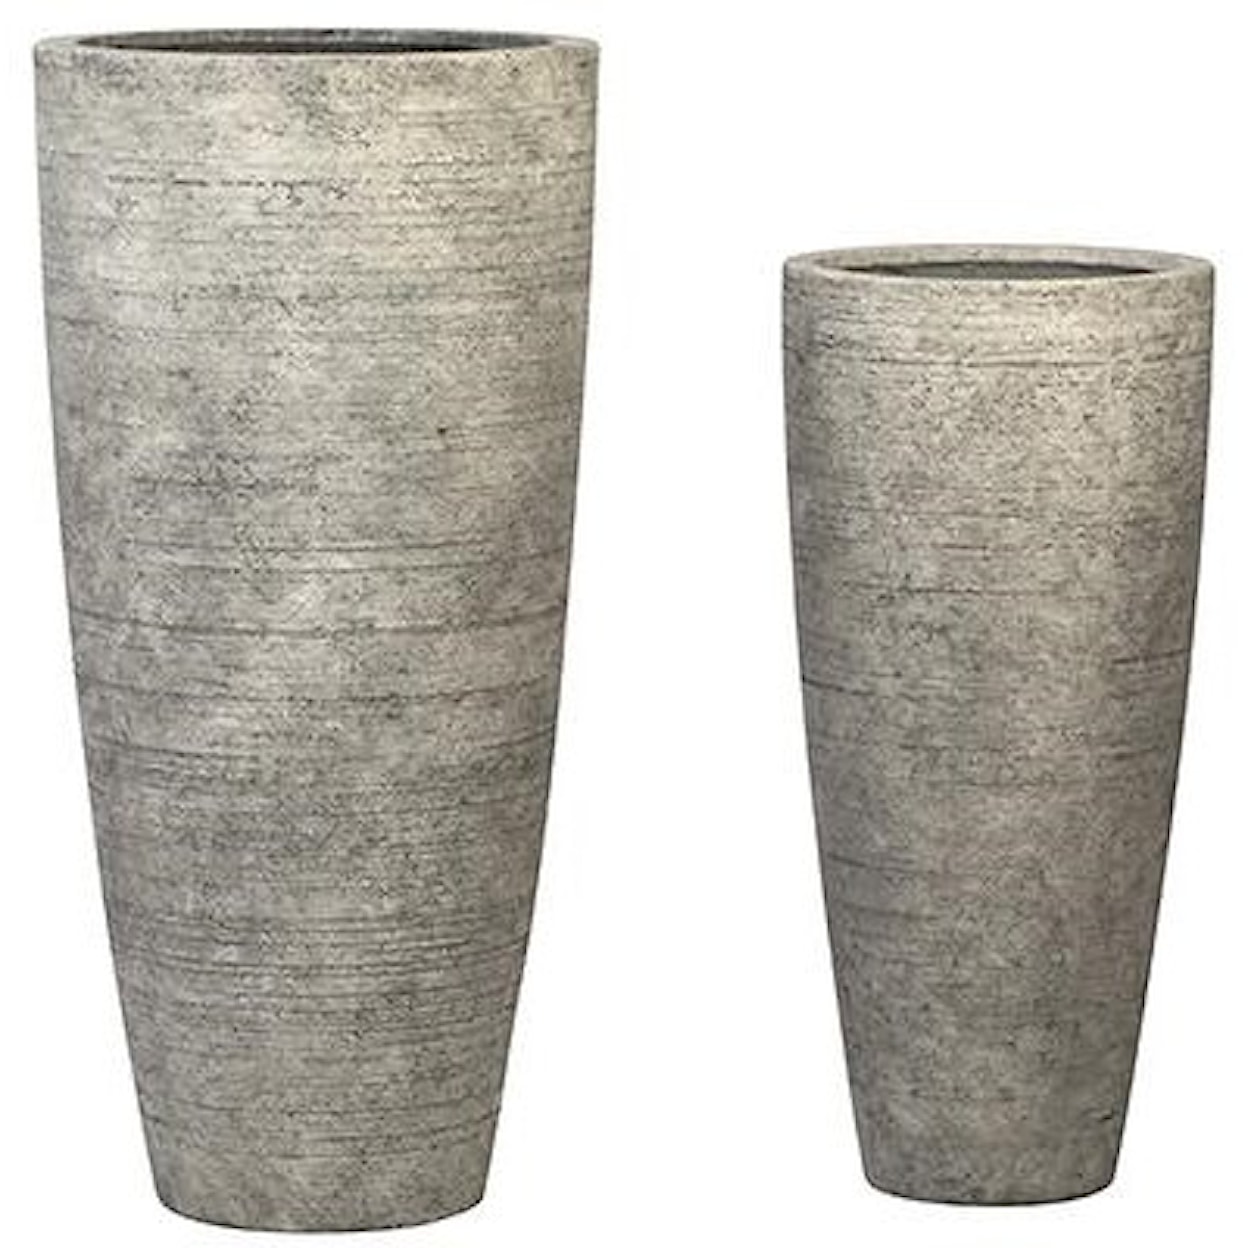 Dovetail Furniture Accessories Ash Gray Pot